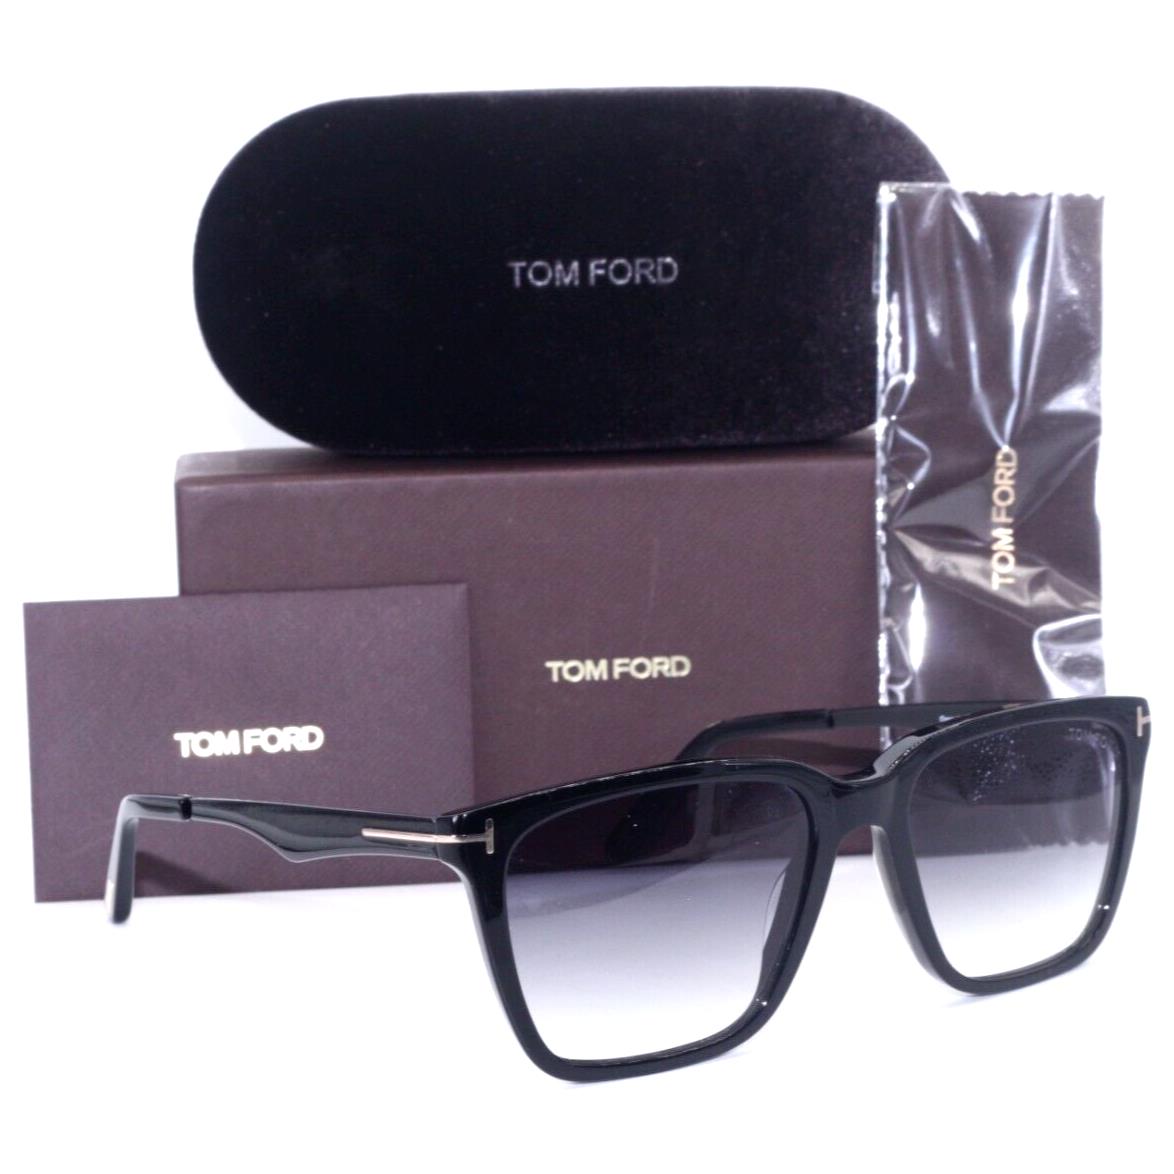 Tom Ford Garrett TF 862 01B Shiny Black Grey Gradient Lens Sunglasses 54-17 - Frame: POLISHED BLACK, Lens: GREY GRADIENT